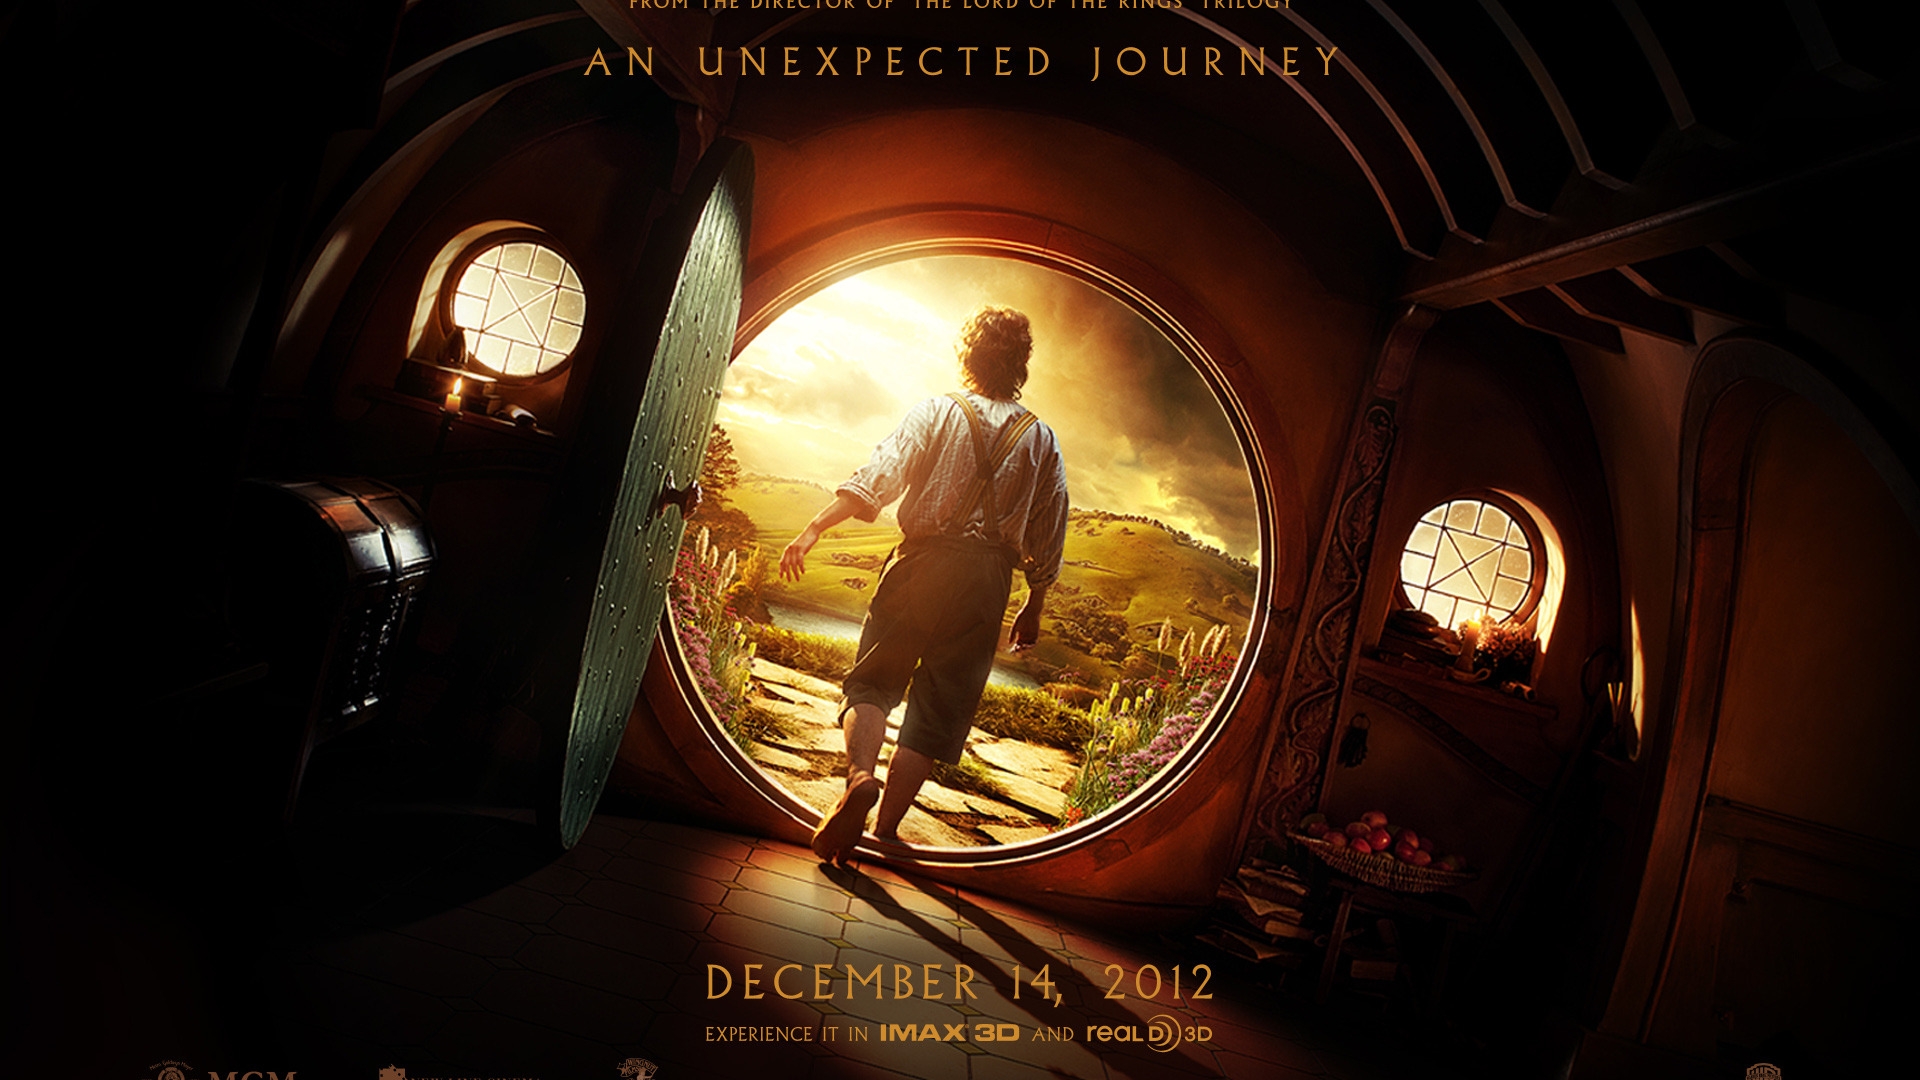 The Hobbit 2012 Movie for 1920 x 1080 HDTV 1080p resolution